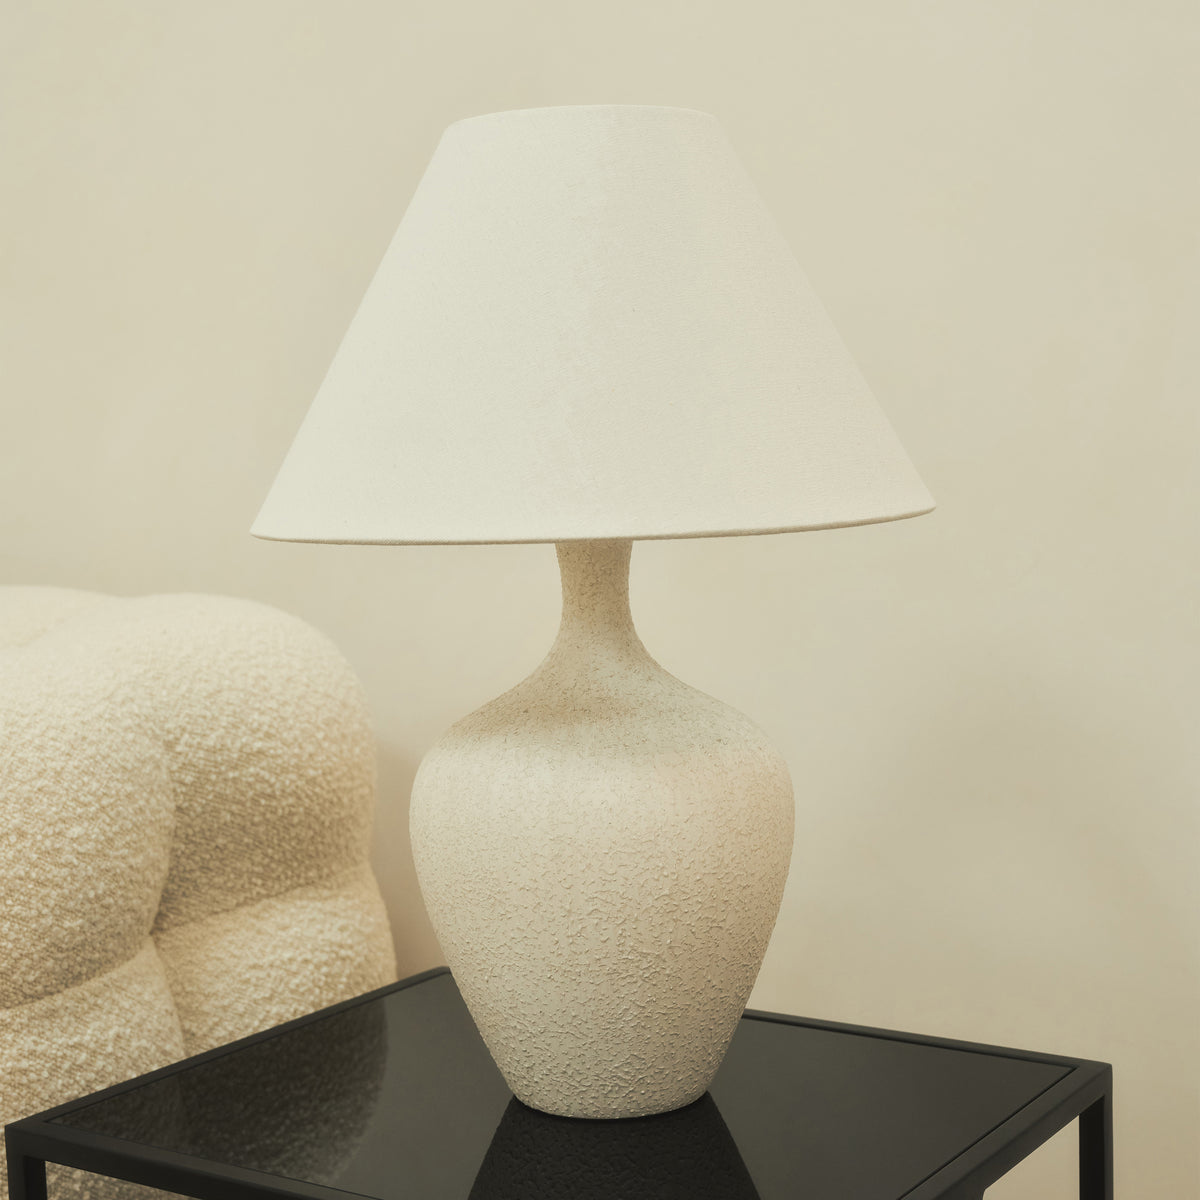 Textured Ceramic Based Table Lamp Natural Shade atop brooklyn table